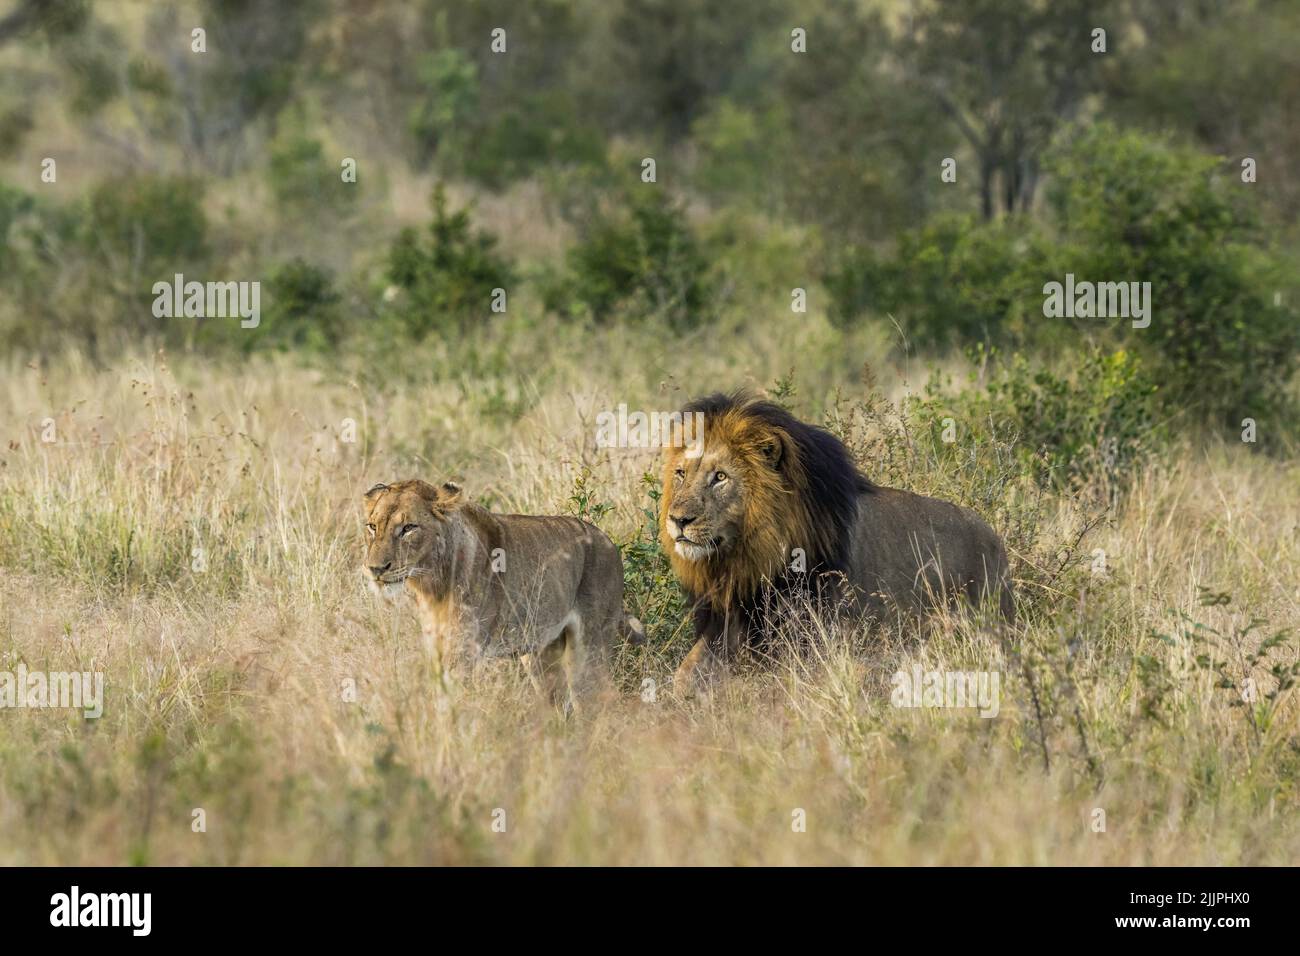 Macho león siguiendo a hembra mate a través de hierba larga - Parque Kruger Foto de stock